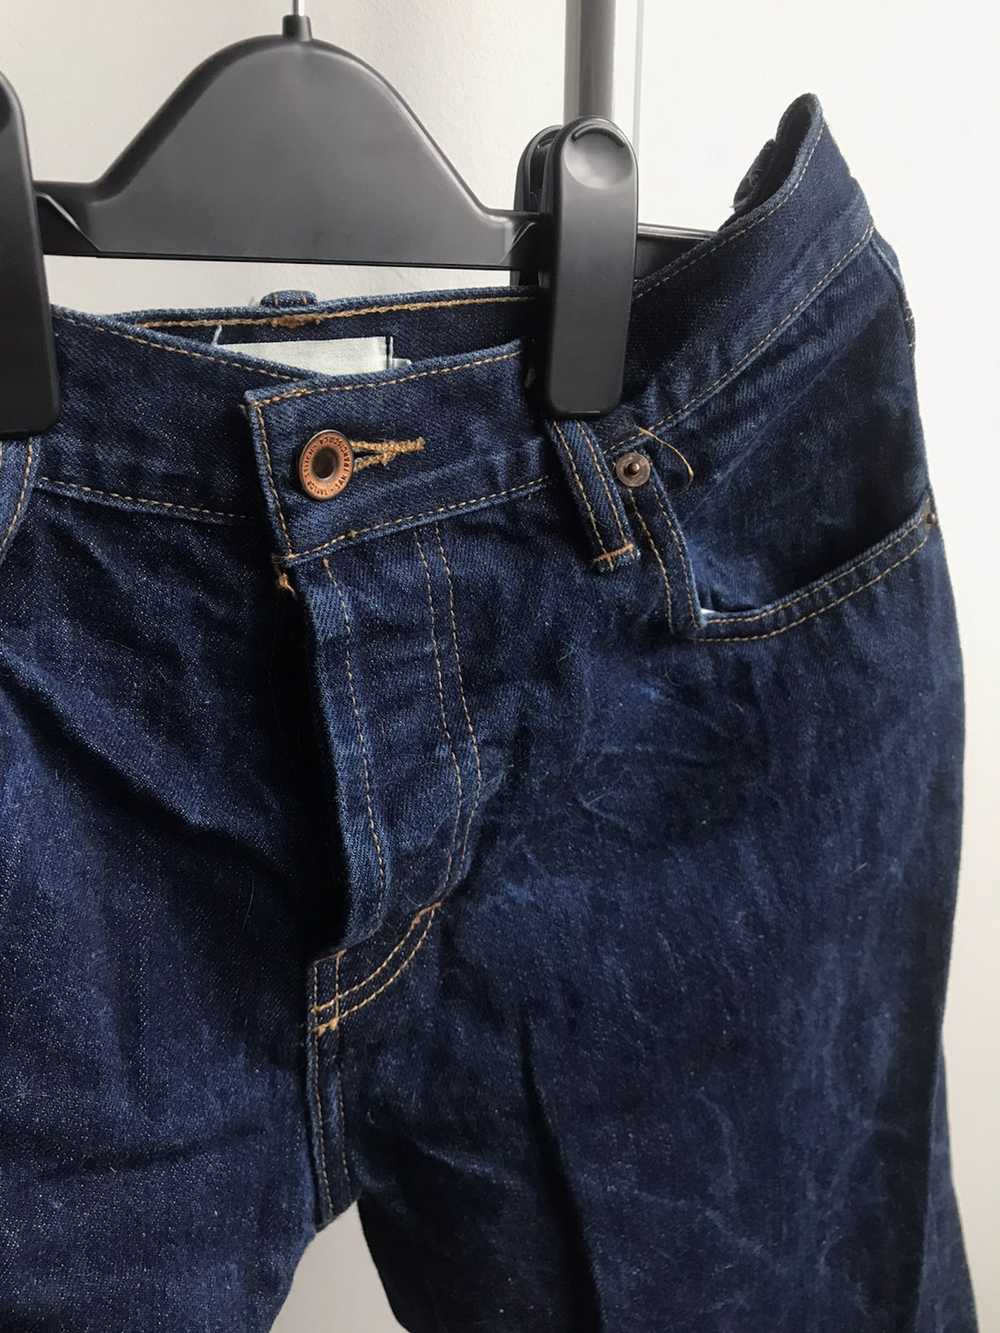 Taylor Stitch Selvedge Denim Jeans 30x32 - image 4